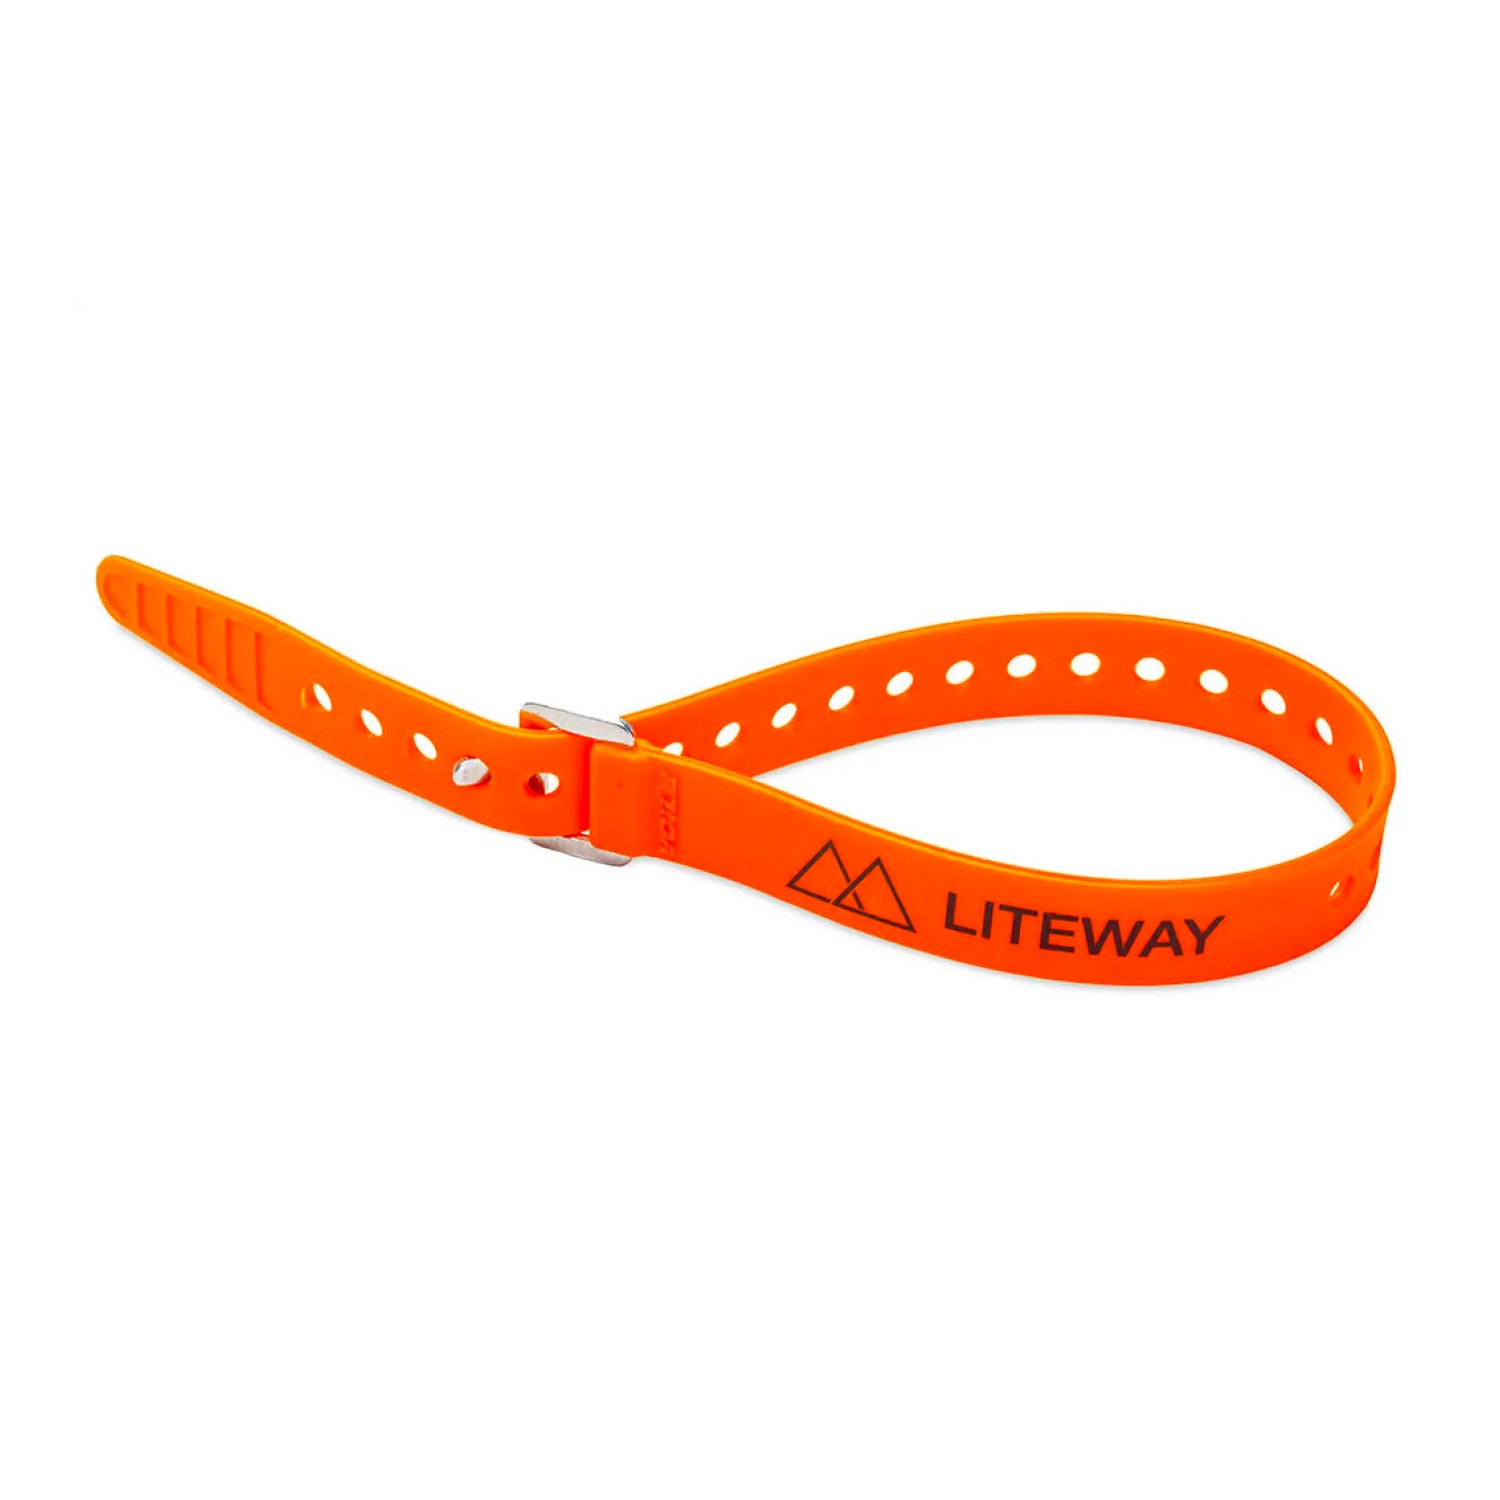 Liteway Pole strap  by Voile Straps® Orange